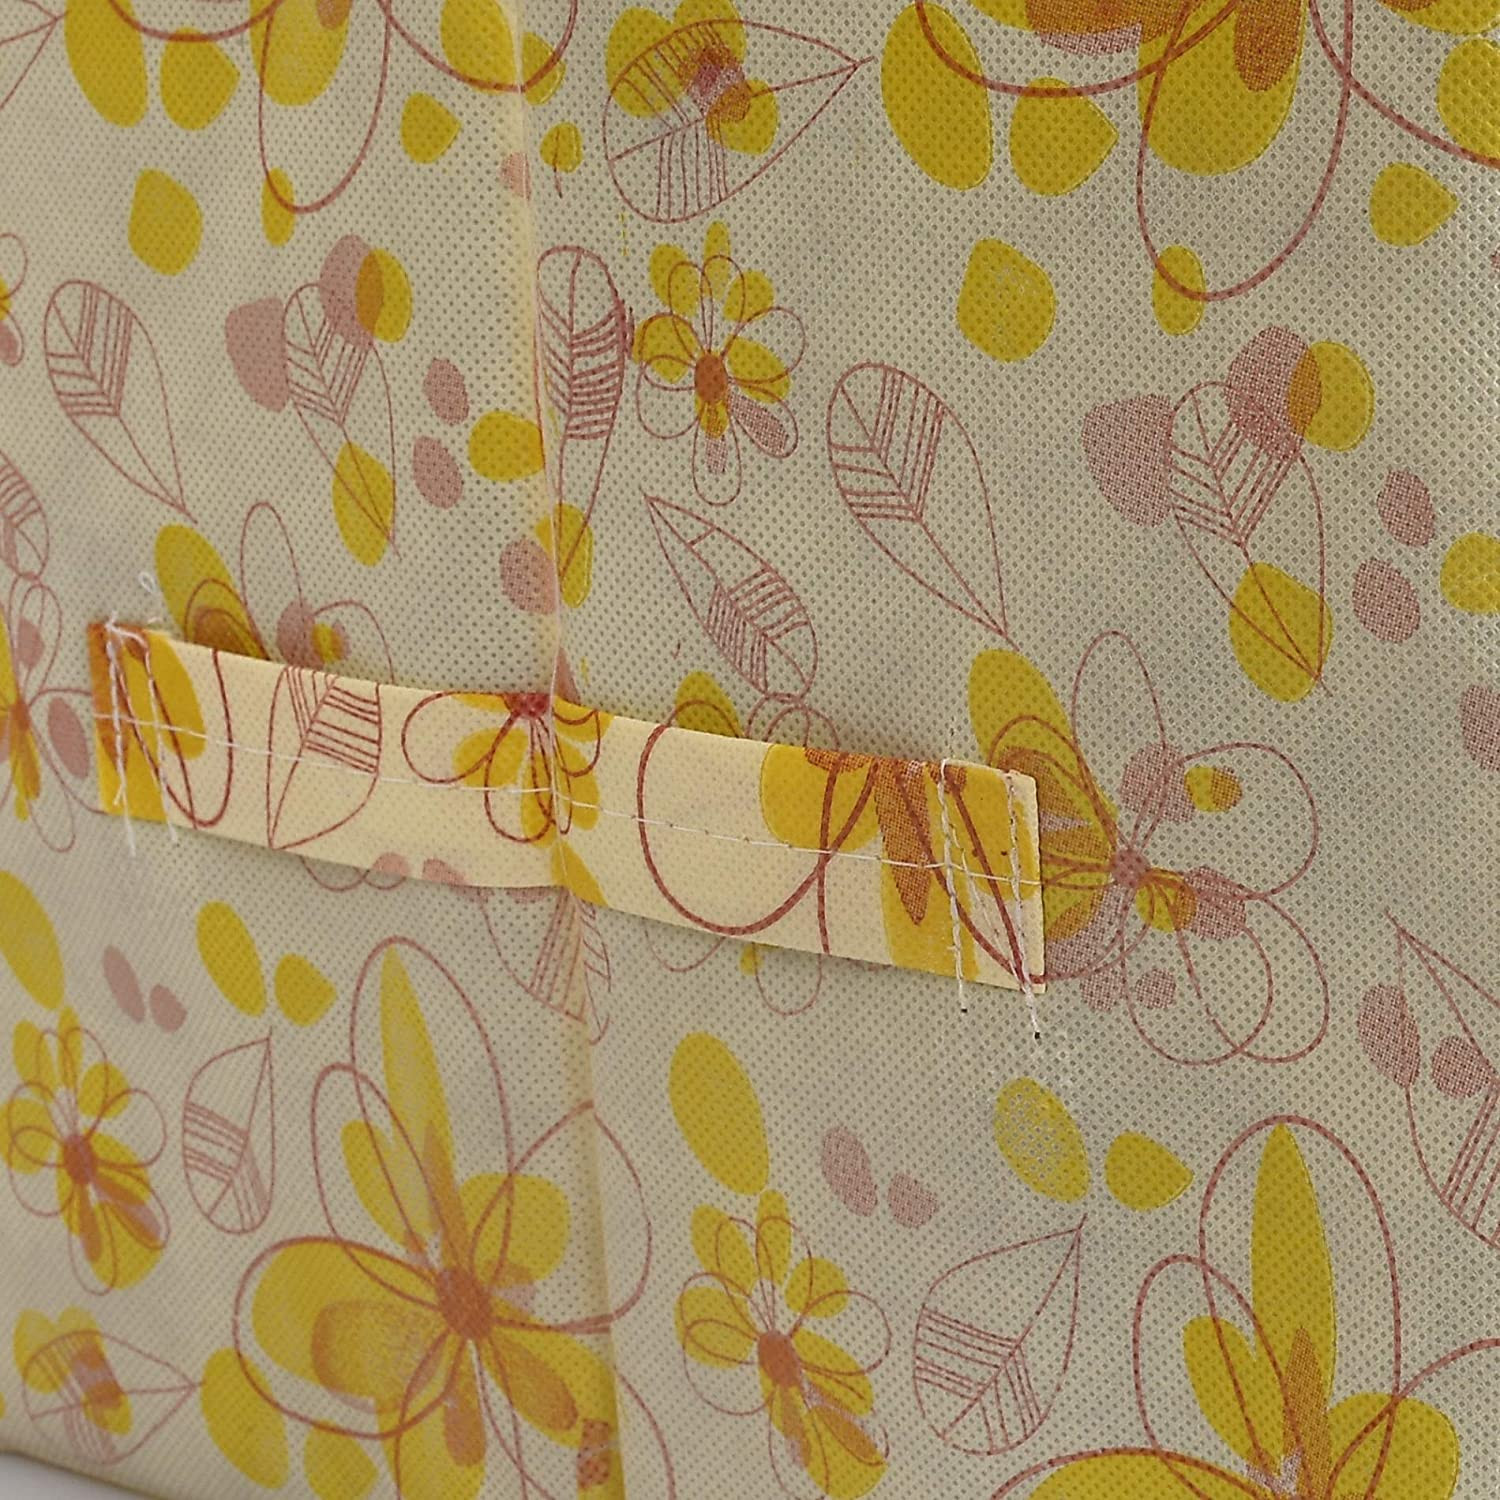 Kuber Industries Flower Design Foldable Rectangle Cloth Saree Stacker Cloth Wardrobe Organizer (Yellow)